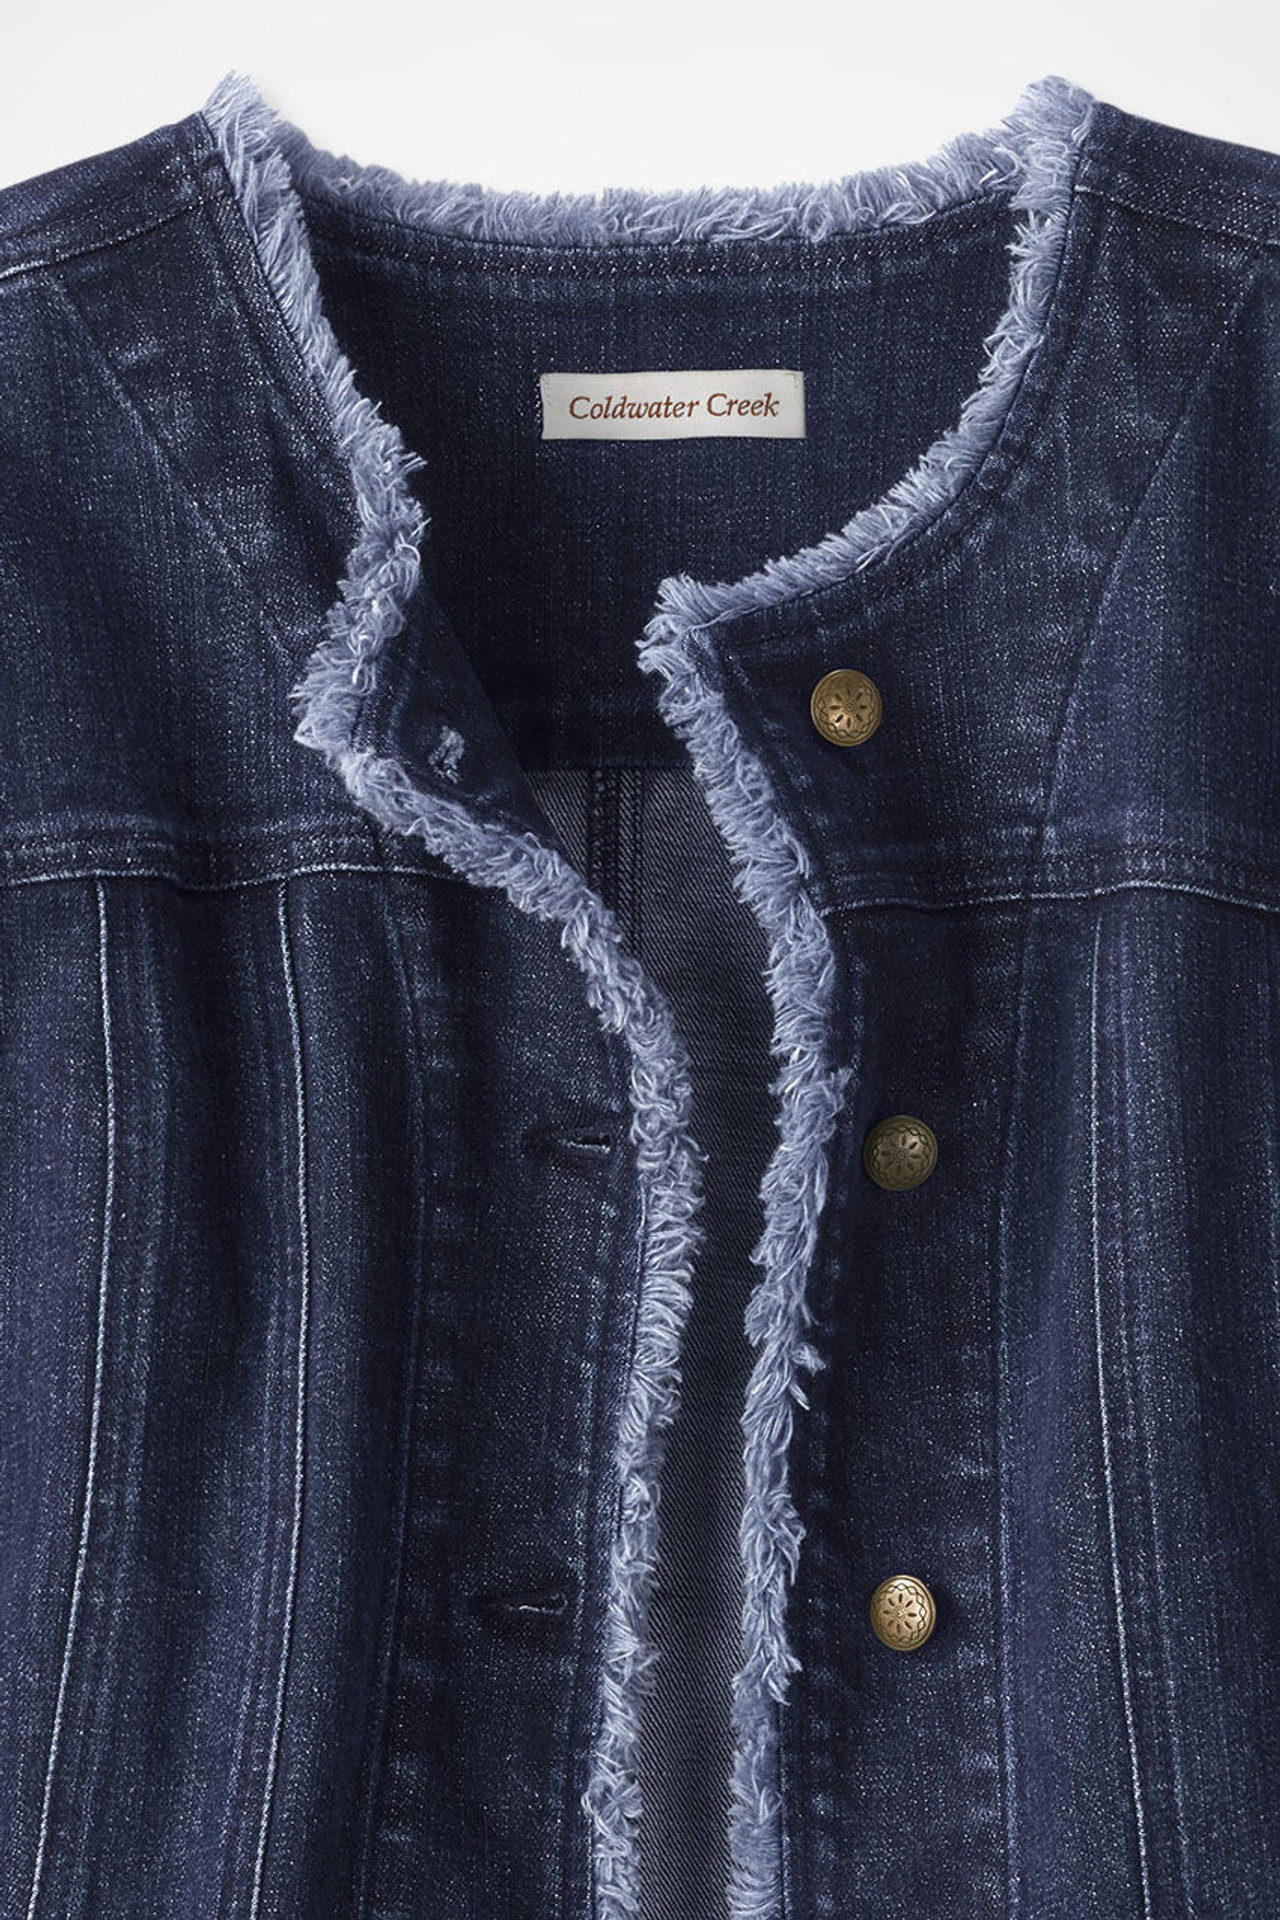 Coldwater Creek Women's Knit Denim Jacket